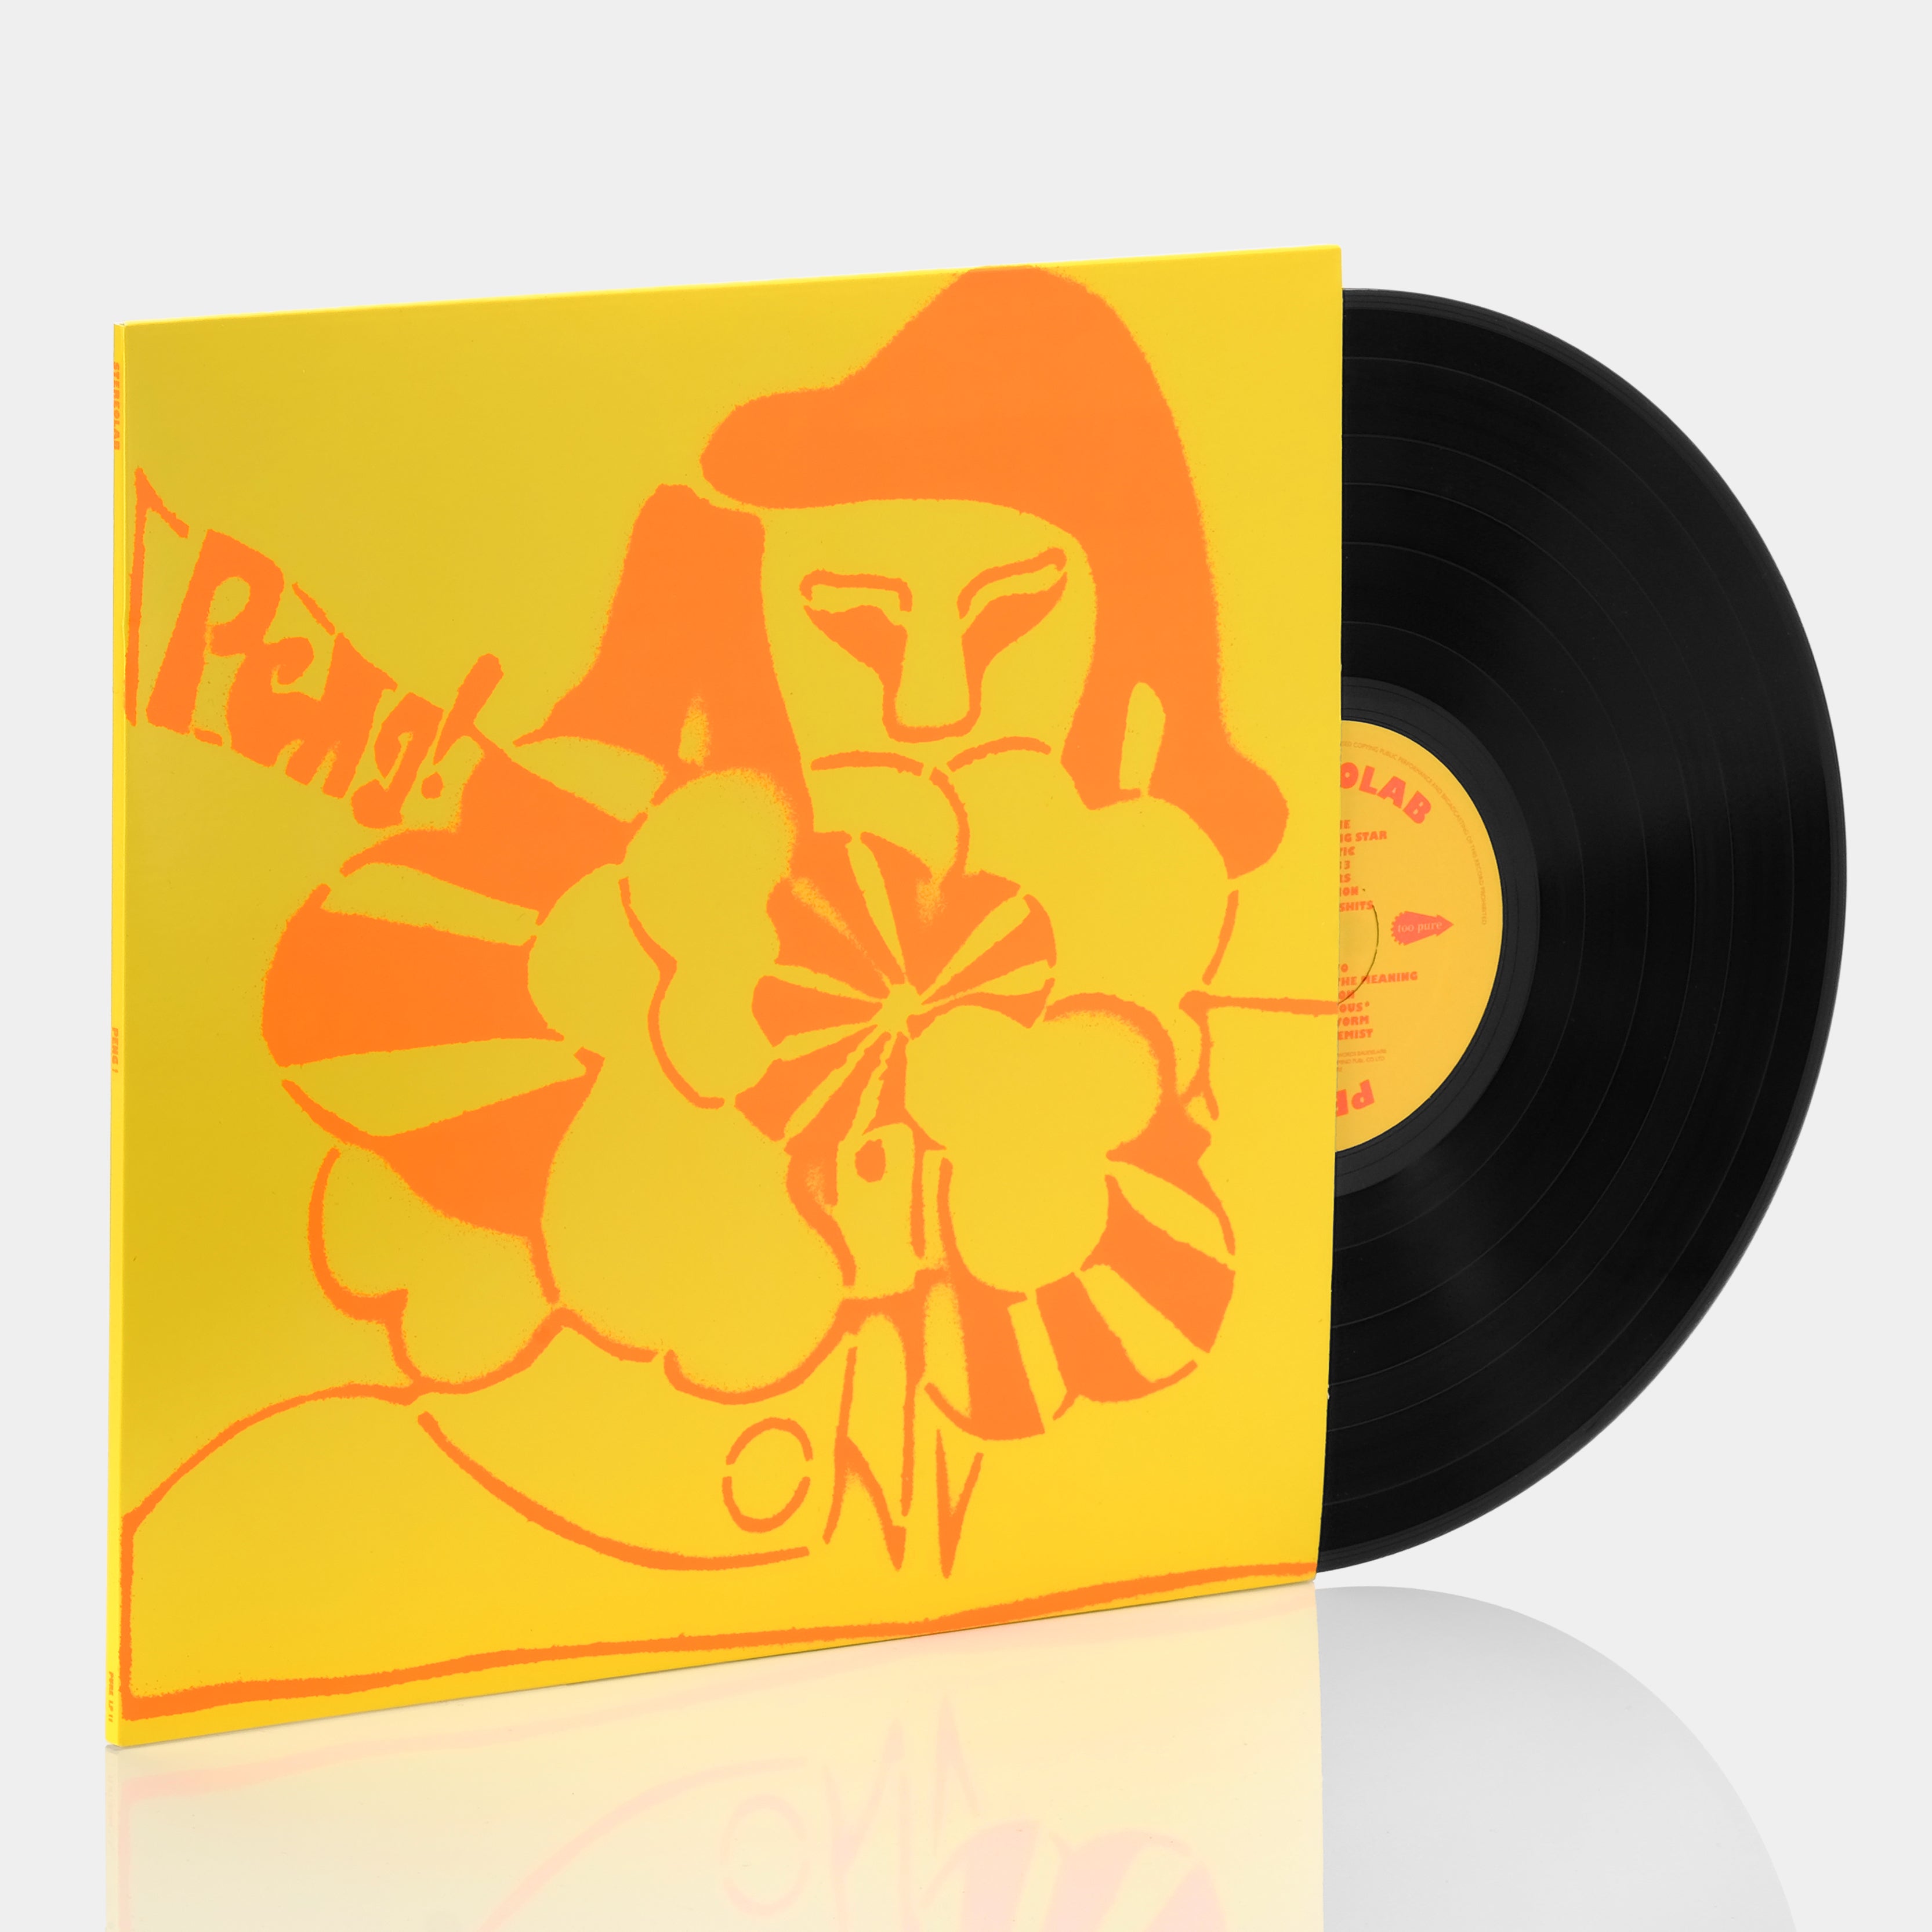 Stereolab - Peng! LP Vinyl Record